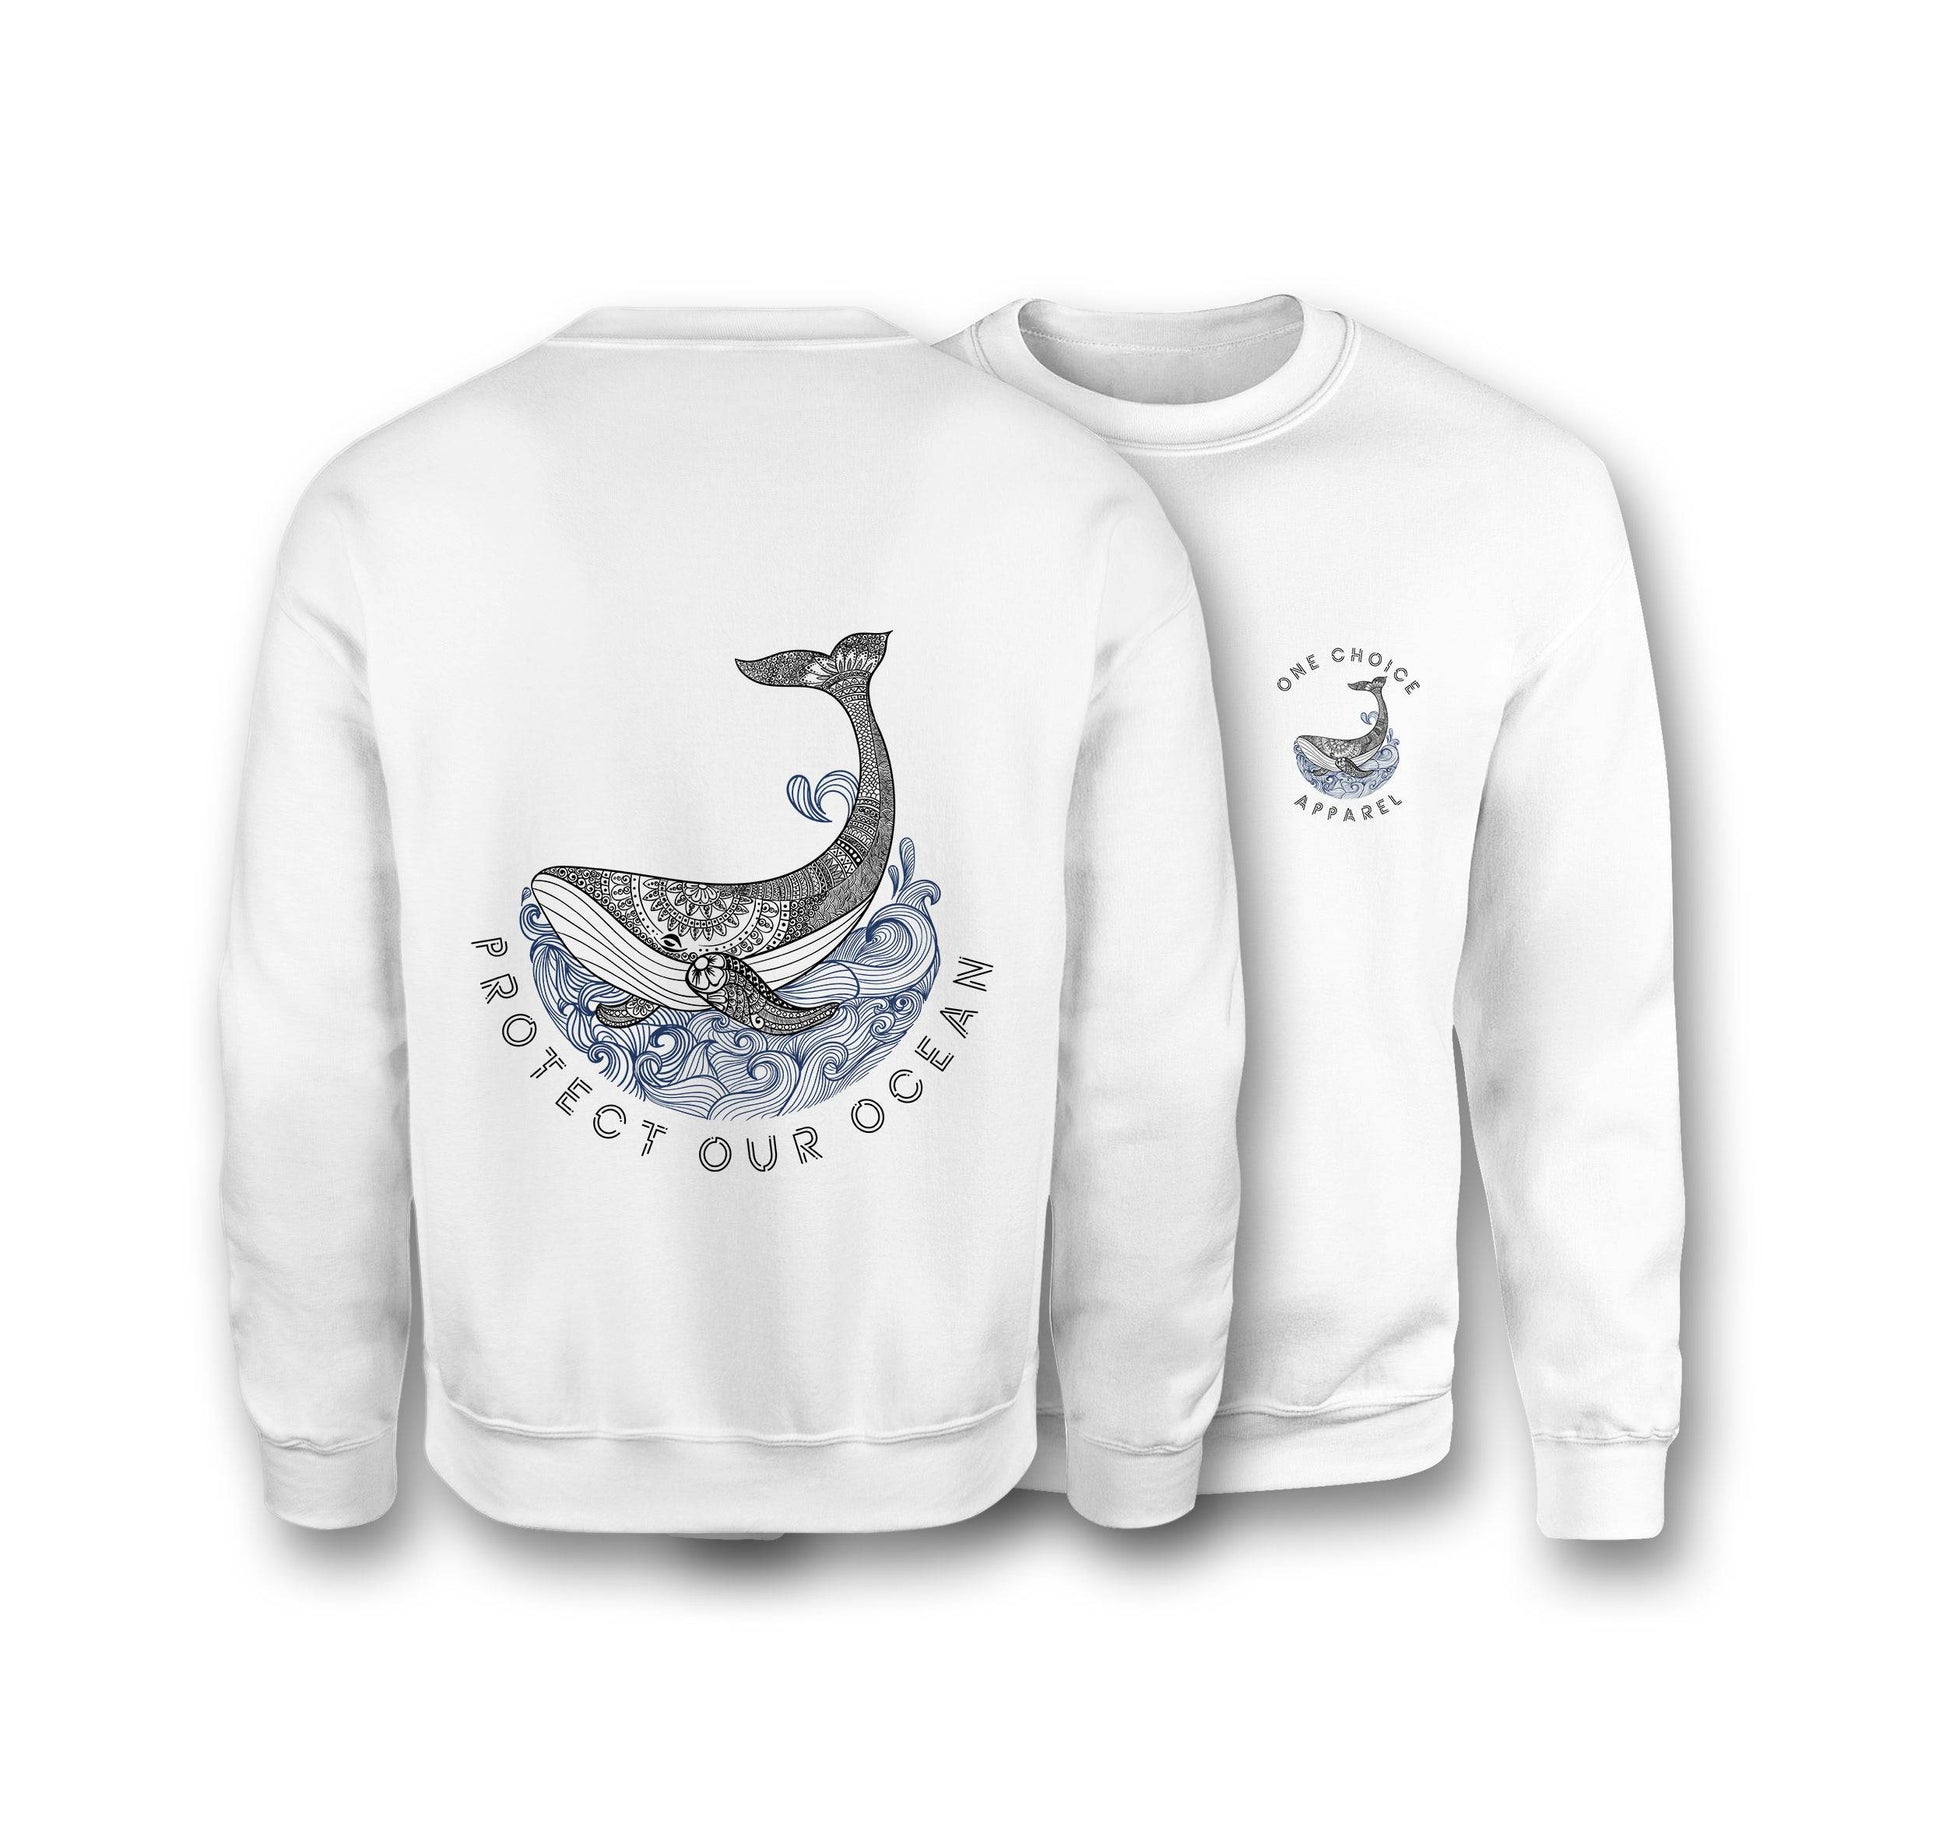 Protect Our Ocean Sweatshirt - Organic Cotton Sweatshirt - One Choice Apparel